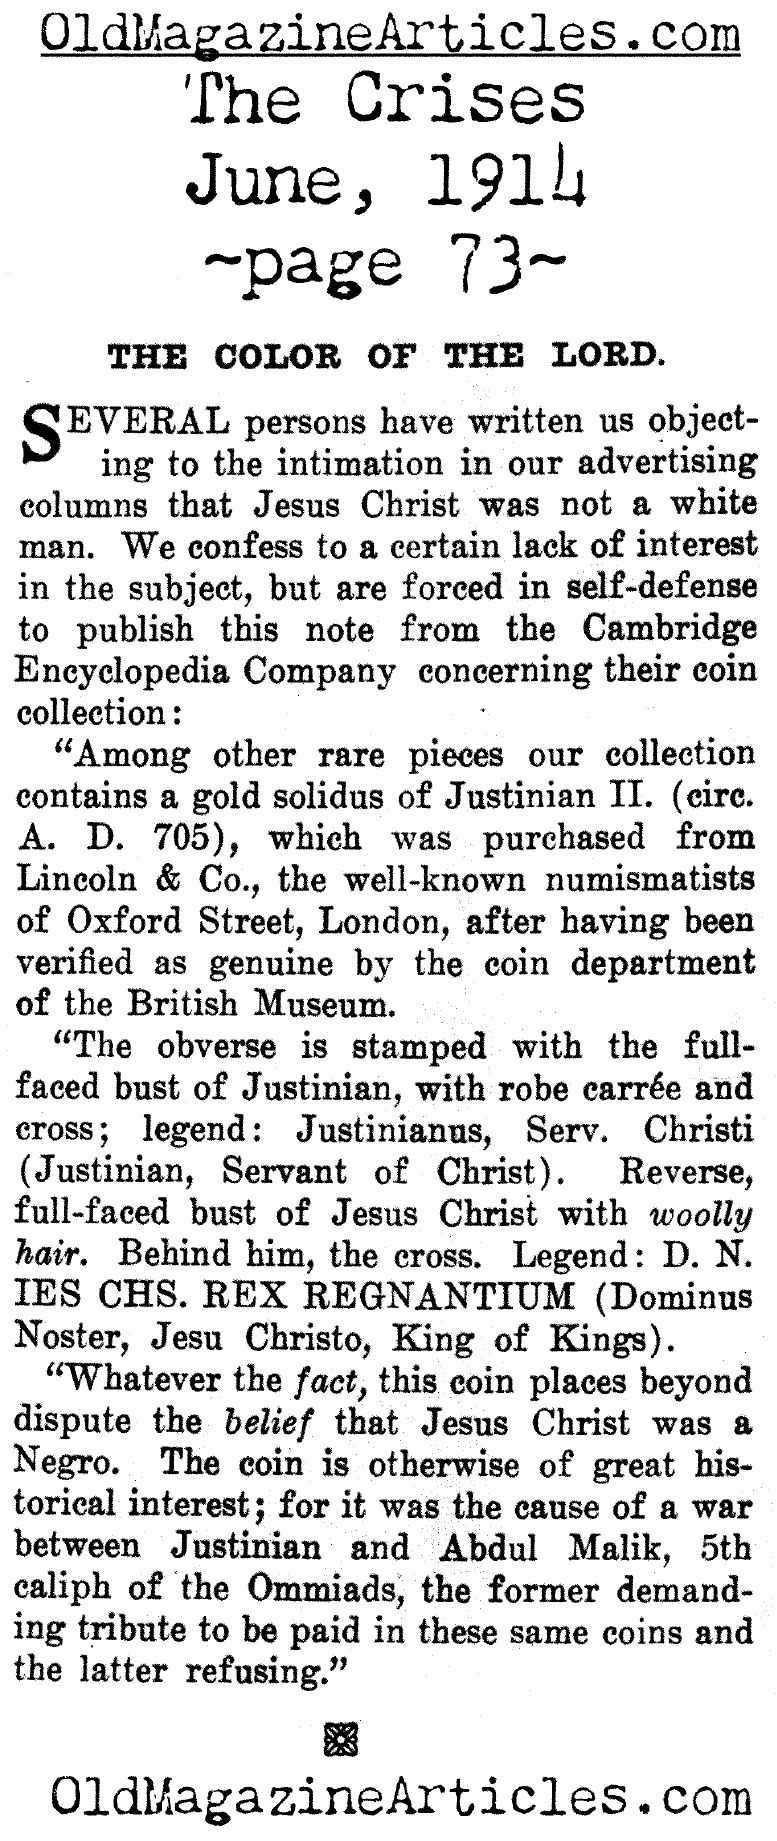 Was Jesus Black? (The Crises, 1914)